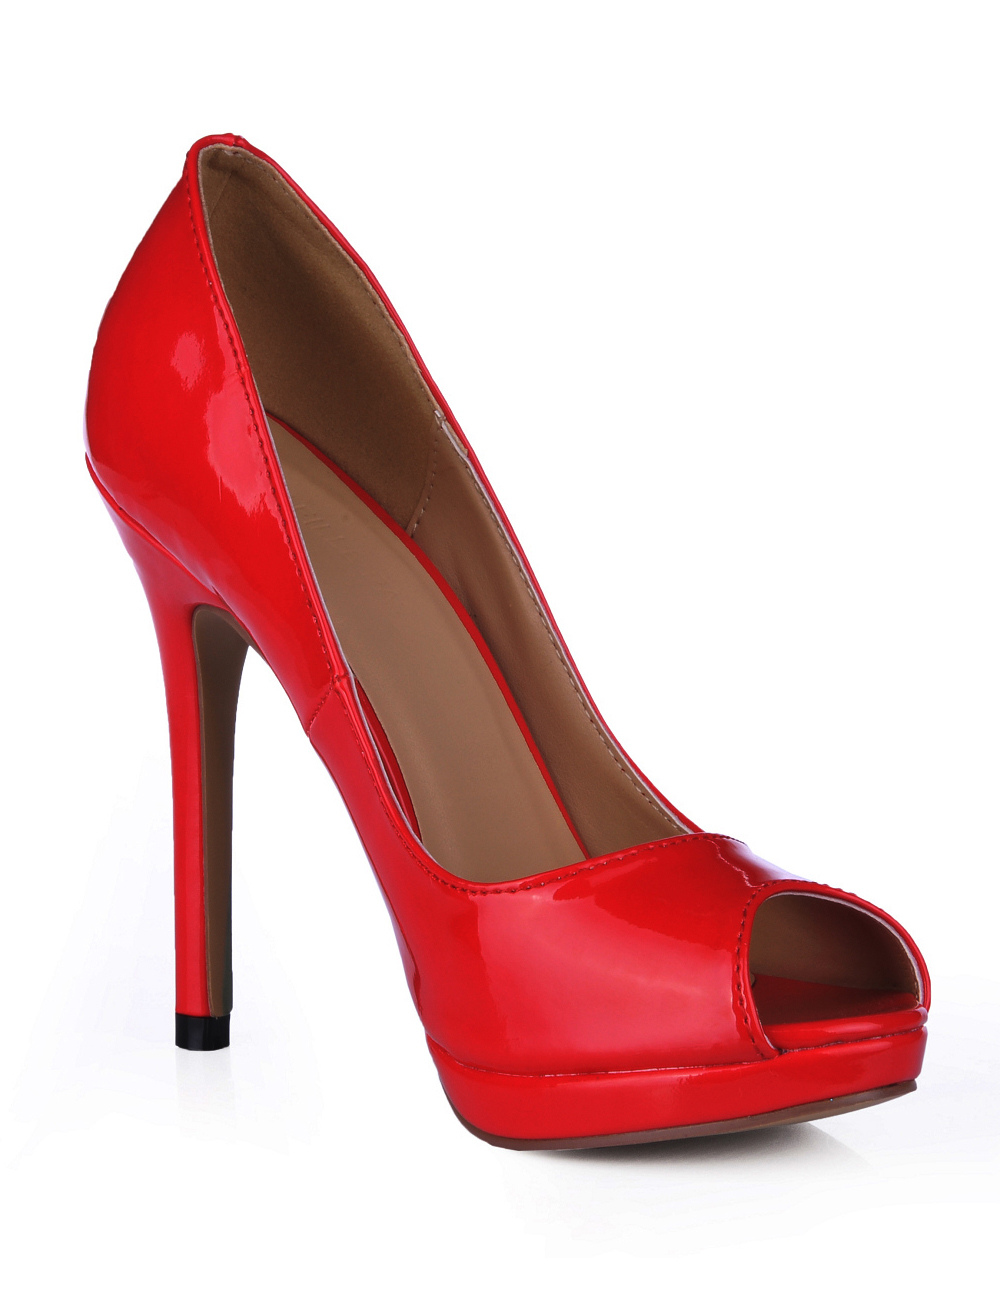 Red Peep Toe Patent Leather Womens Pumps - Milanoo.com